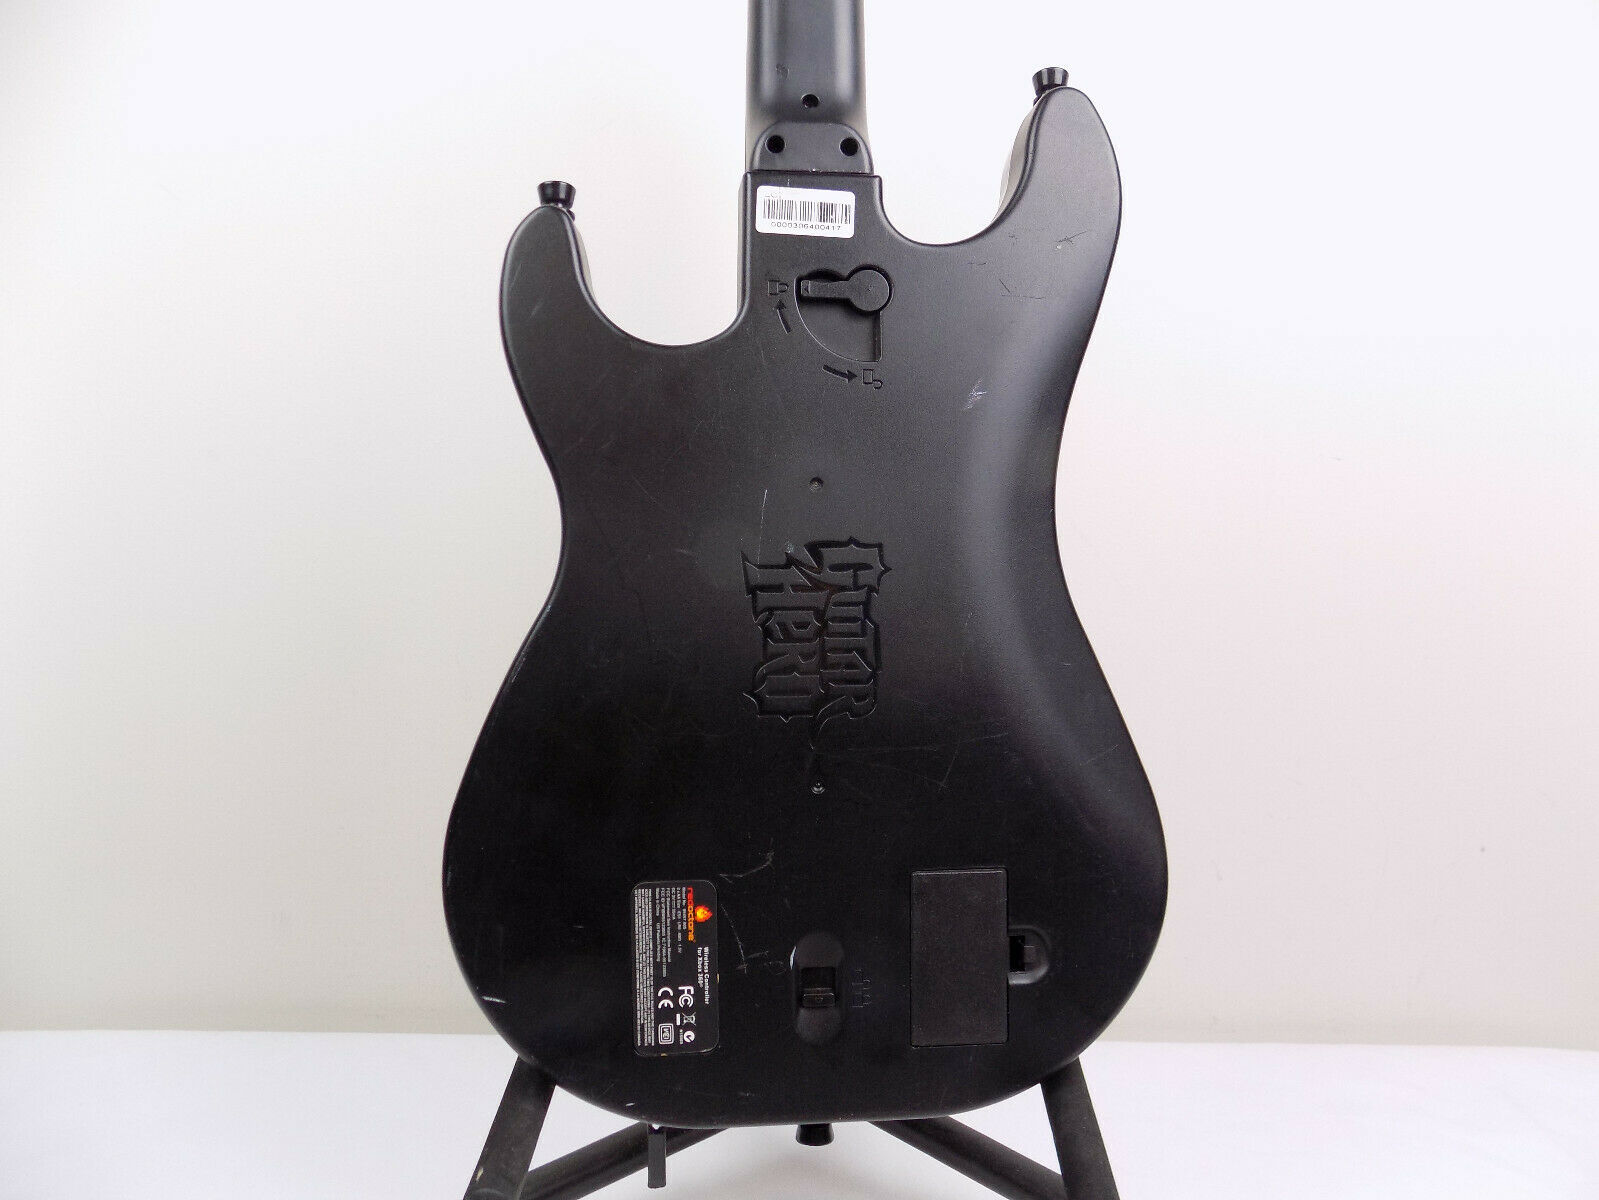 File:Guitar Hero 3 - black controller for Xbox 360.jpg - Wikipedia